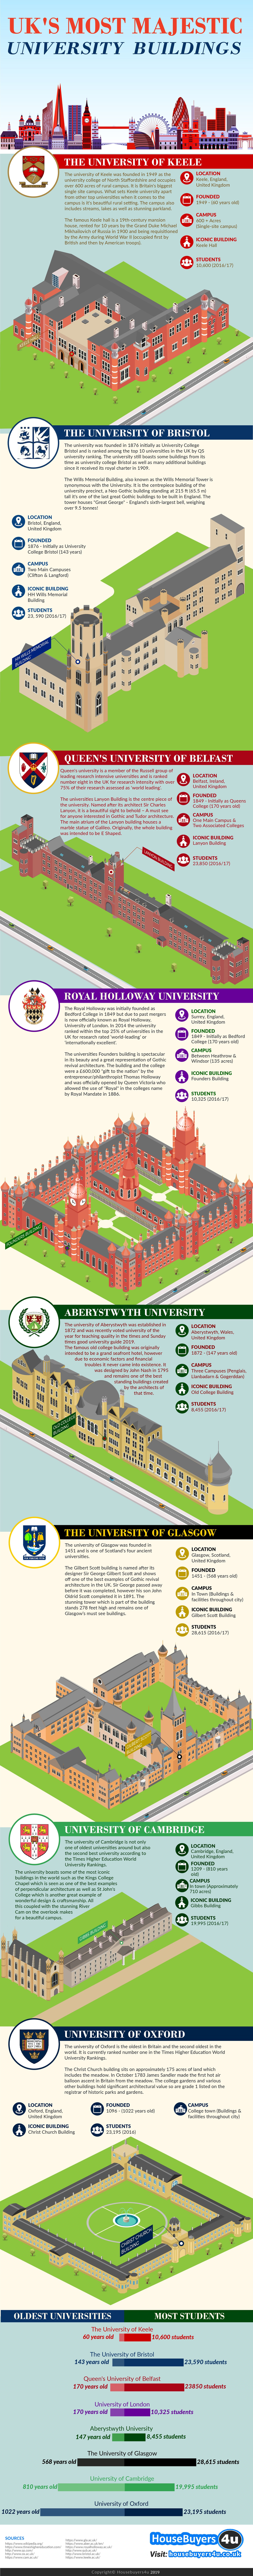 UK’s Most Majestic University Buildings by Housebuyers4u